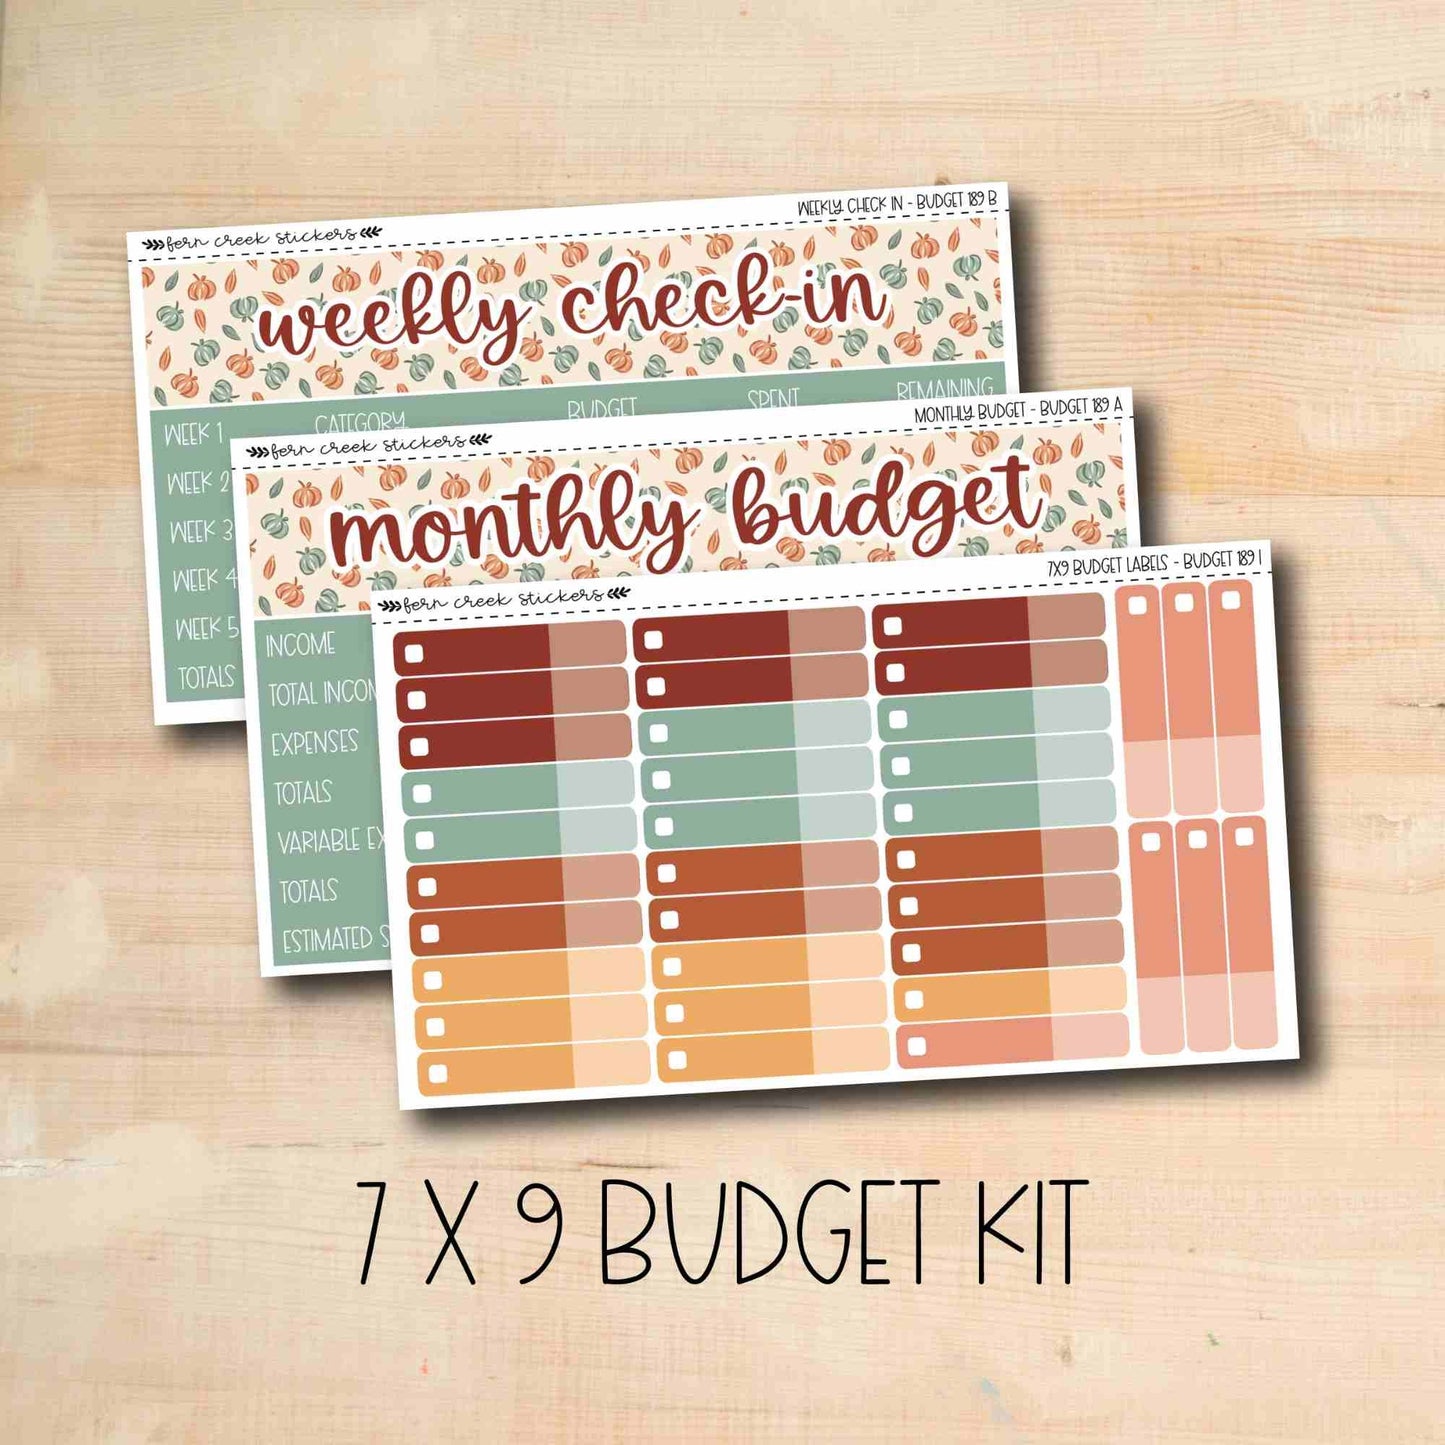 BUDGET-189 || GATHER 7x9 budget kit